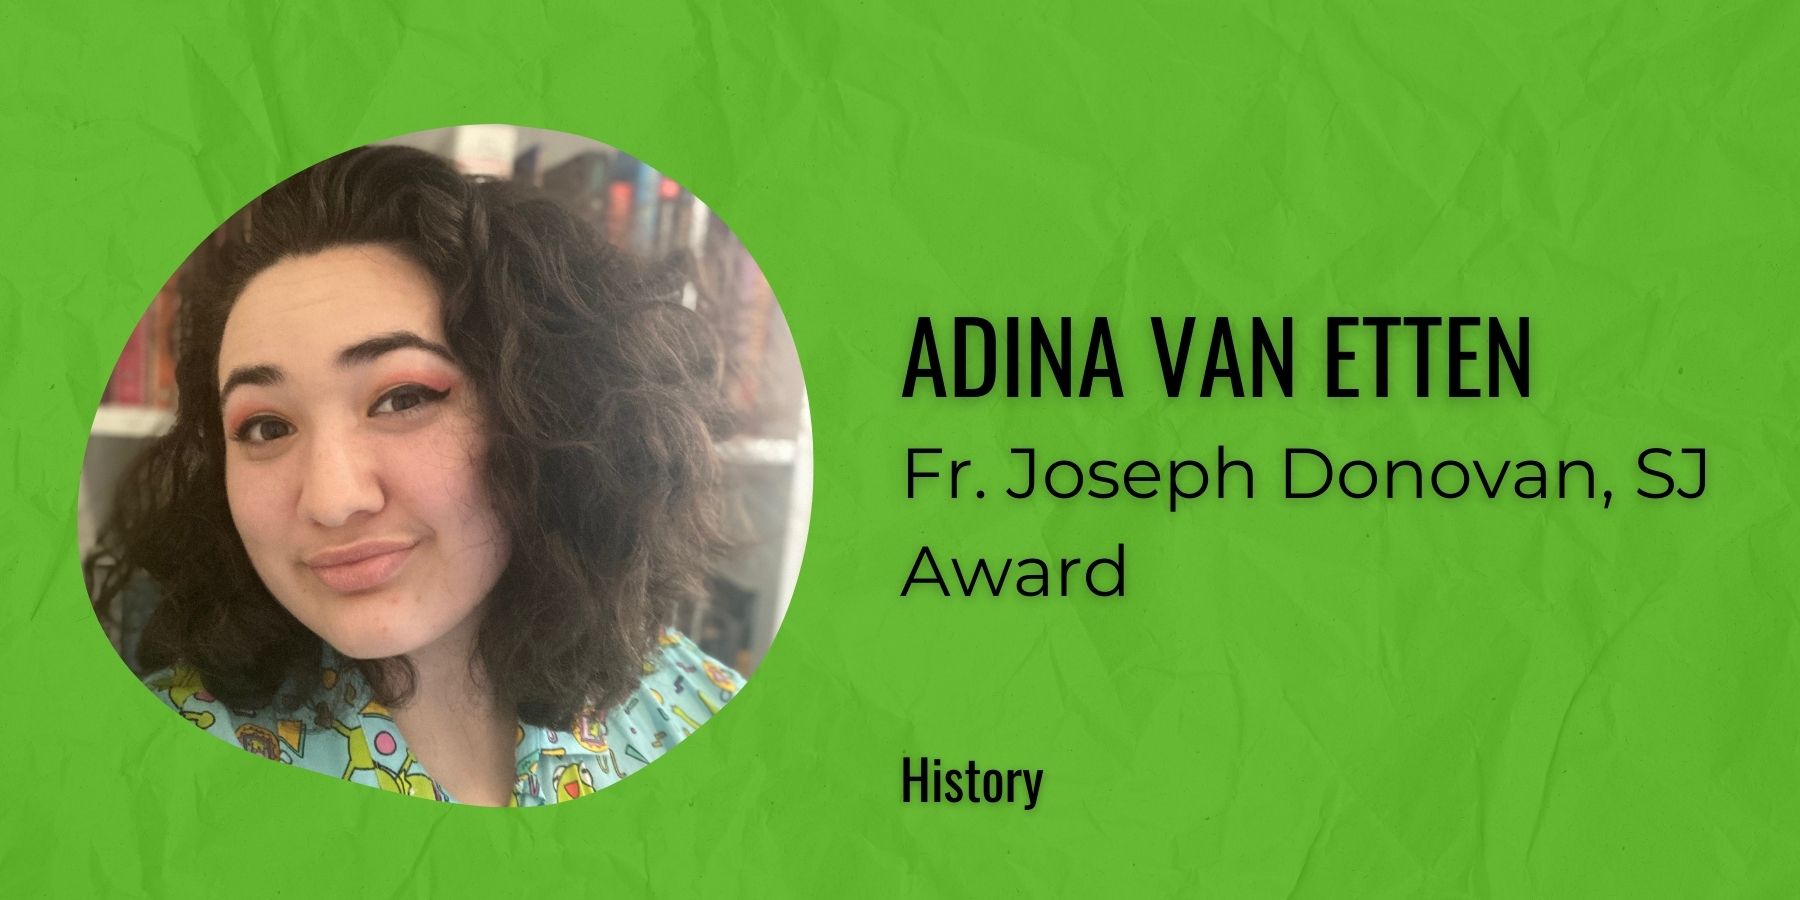 Image of Adina Van Etten with text: Fr. Joseph Donovan, SJ Award, History
